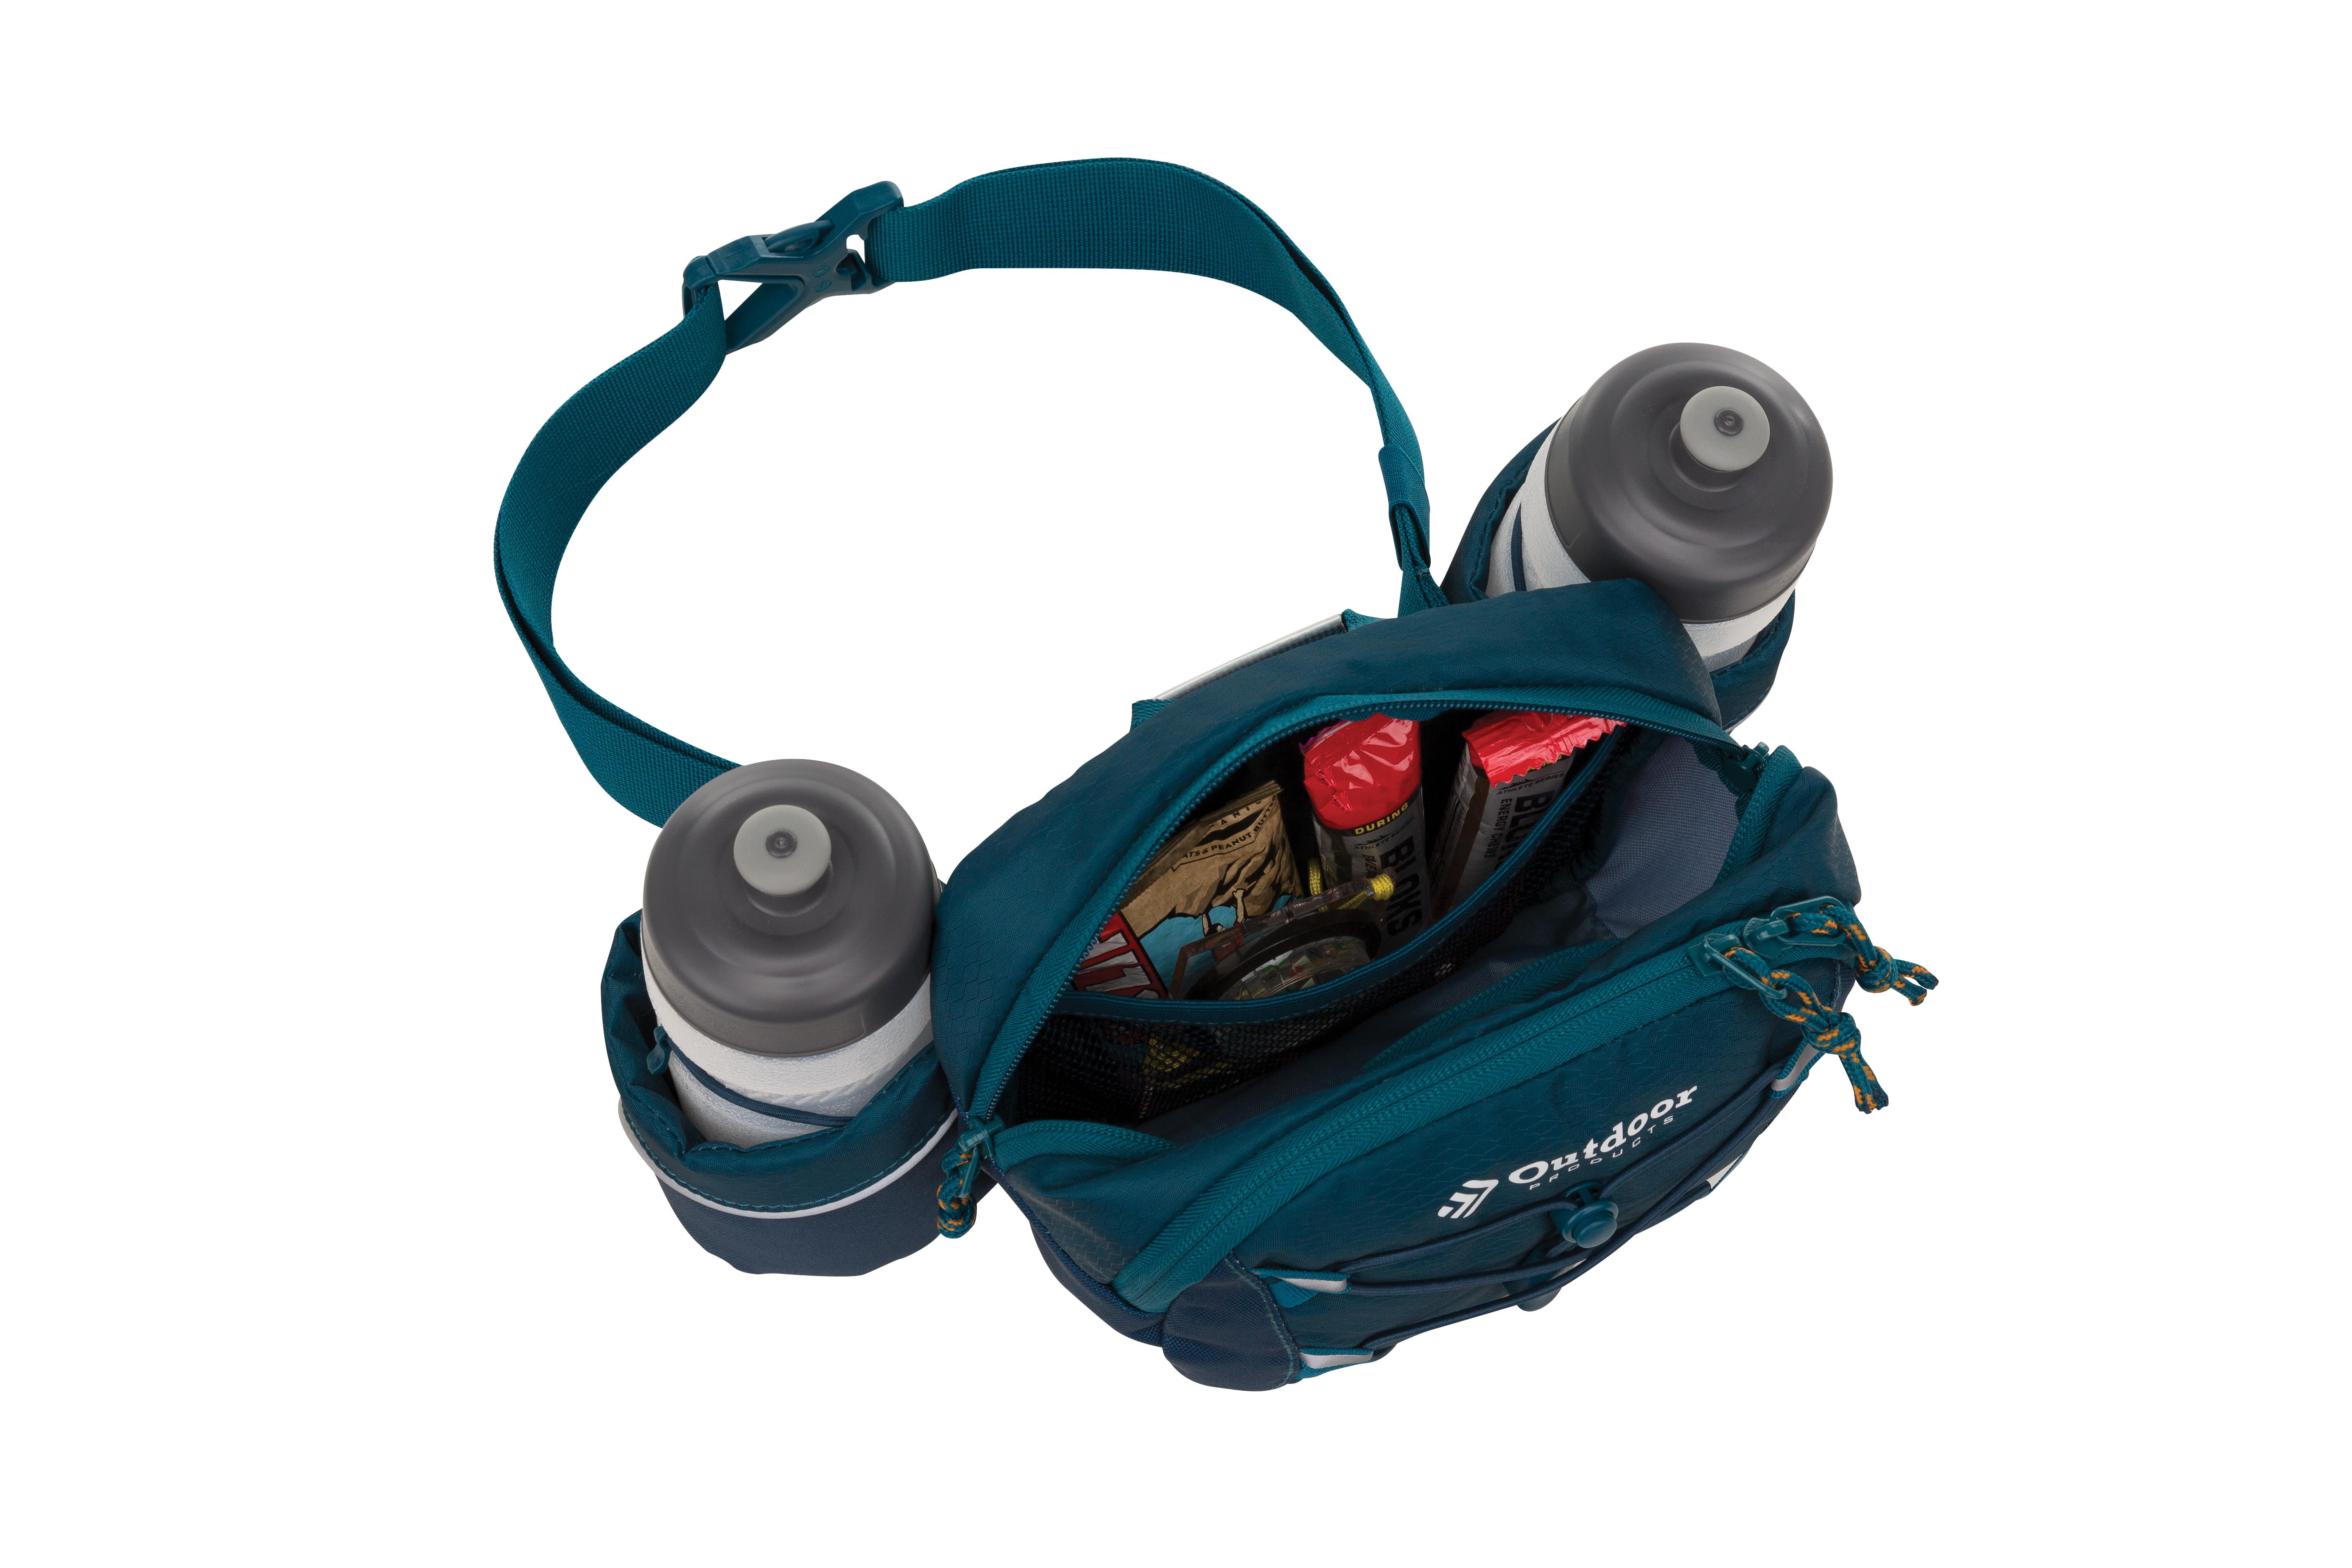 Us 5.11 Outdoor Small Capacity Waistpack Lv6 Portable Bag 56445